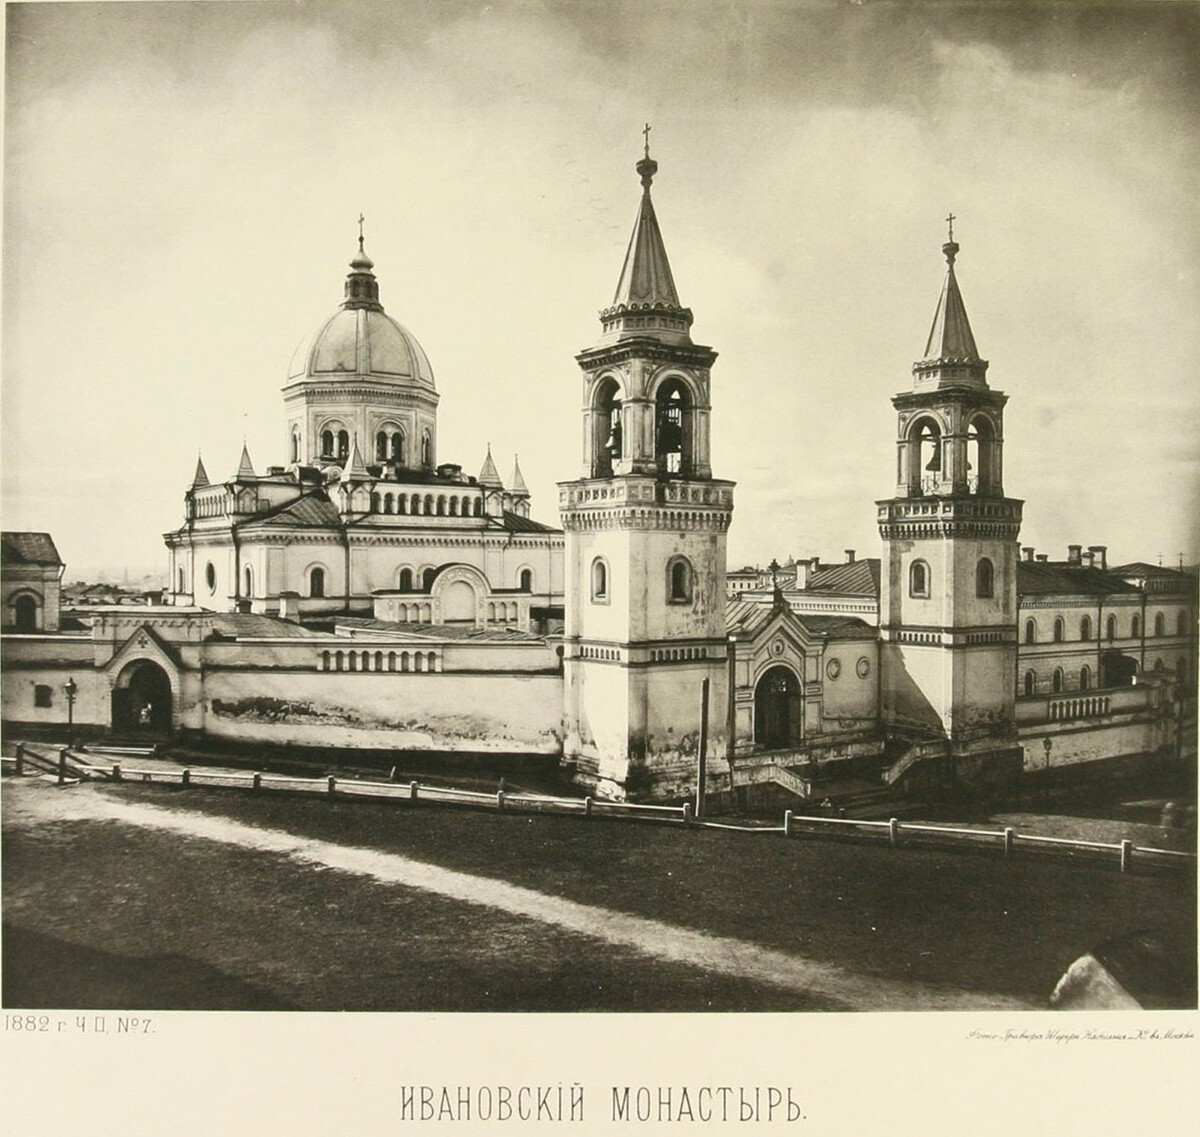 Ivanovsky Convent in 1882.